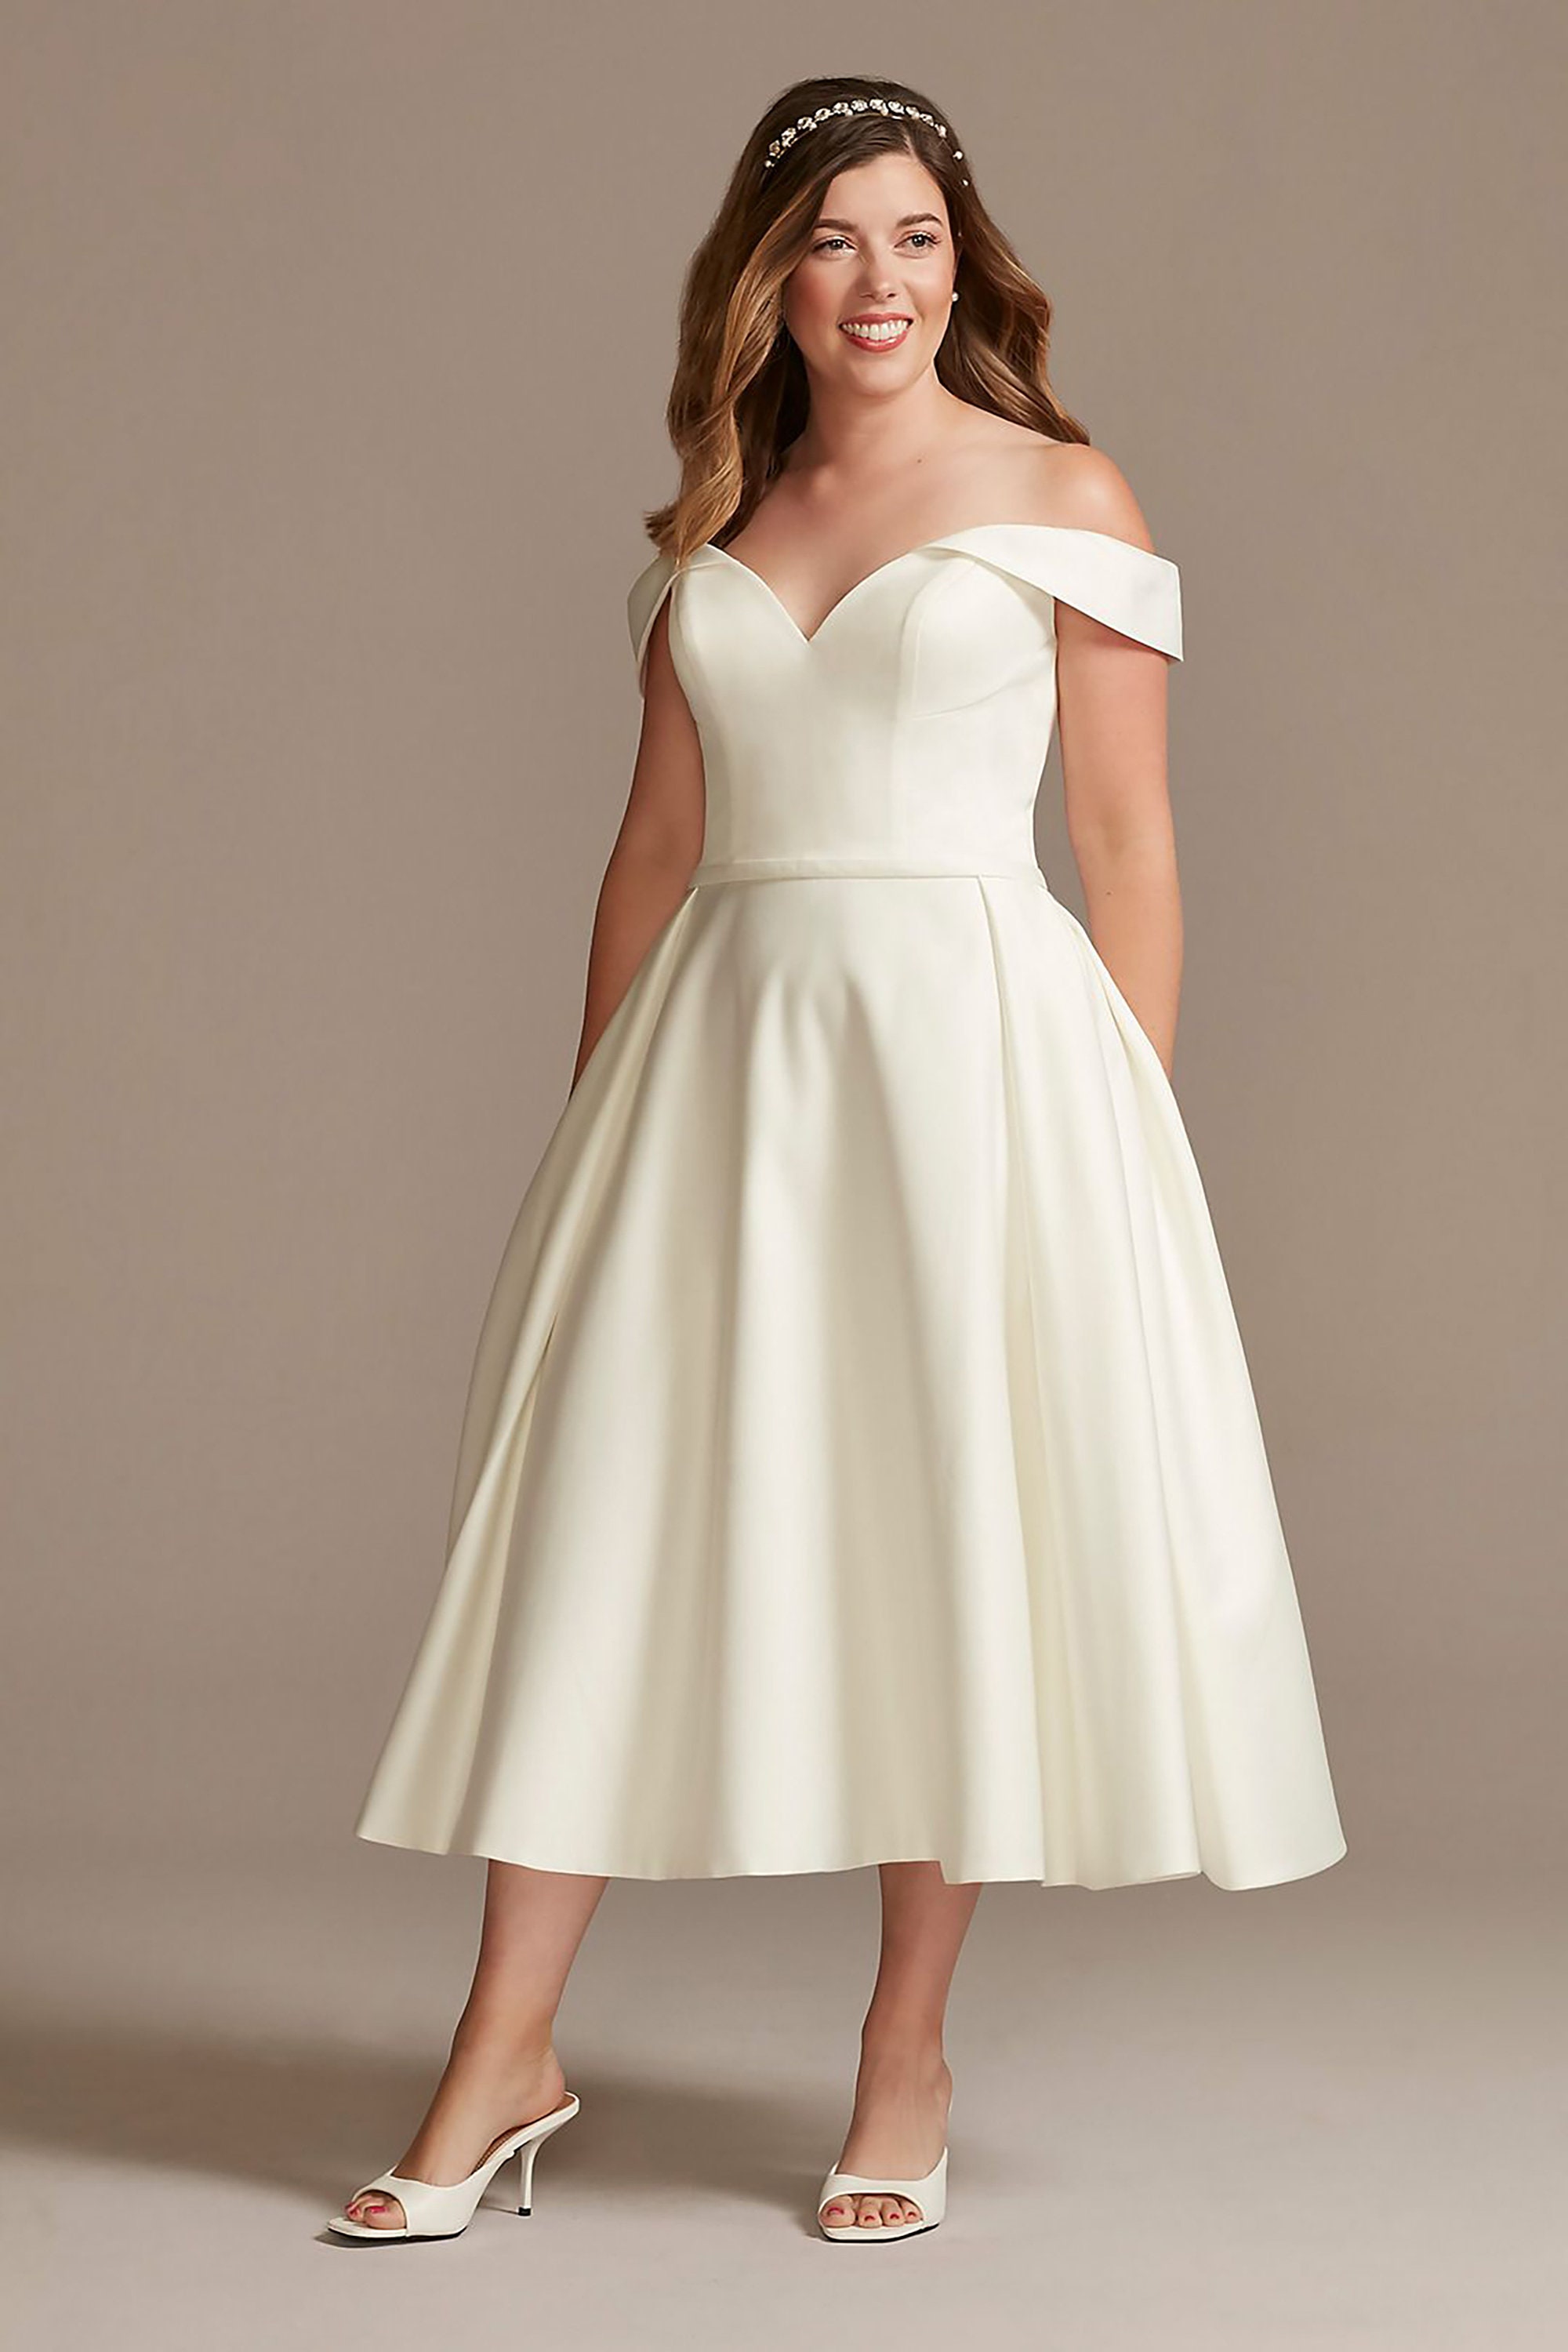 Parlament middag halt Custom Tea-length Wedding Dress Chic & Simple Bridal Gown - Etsy